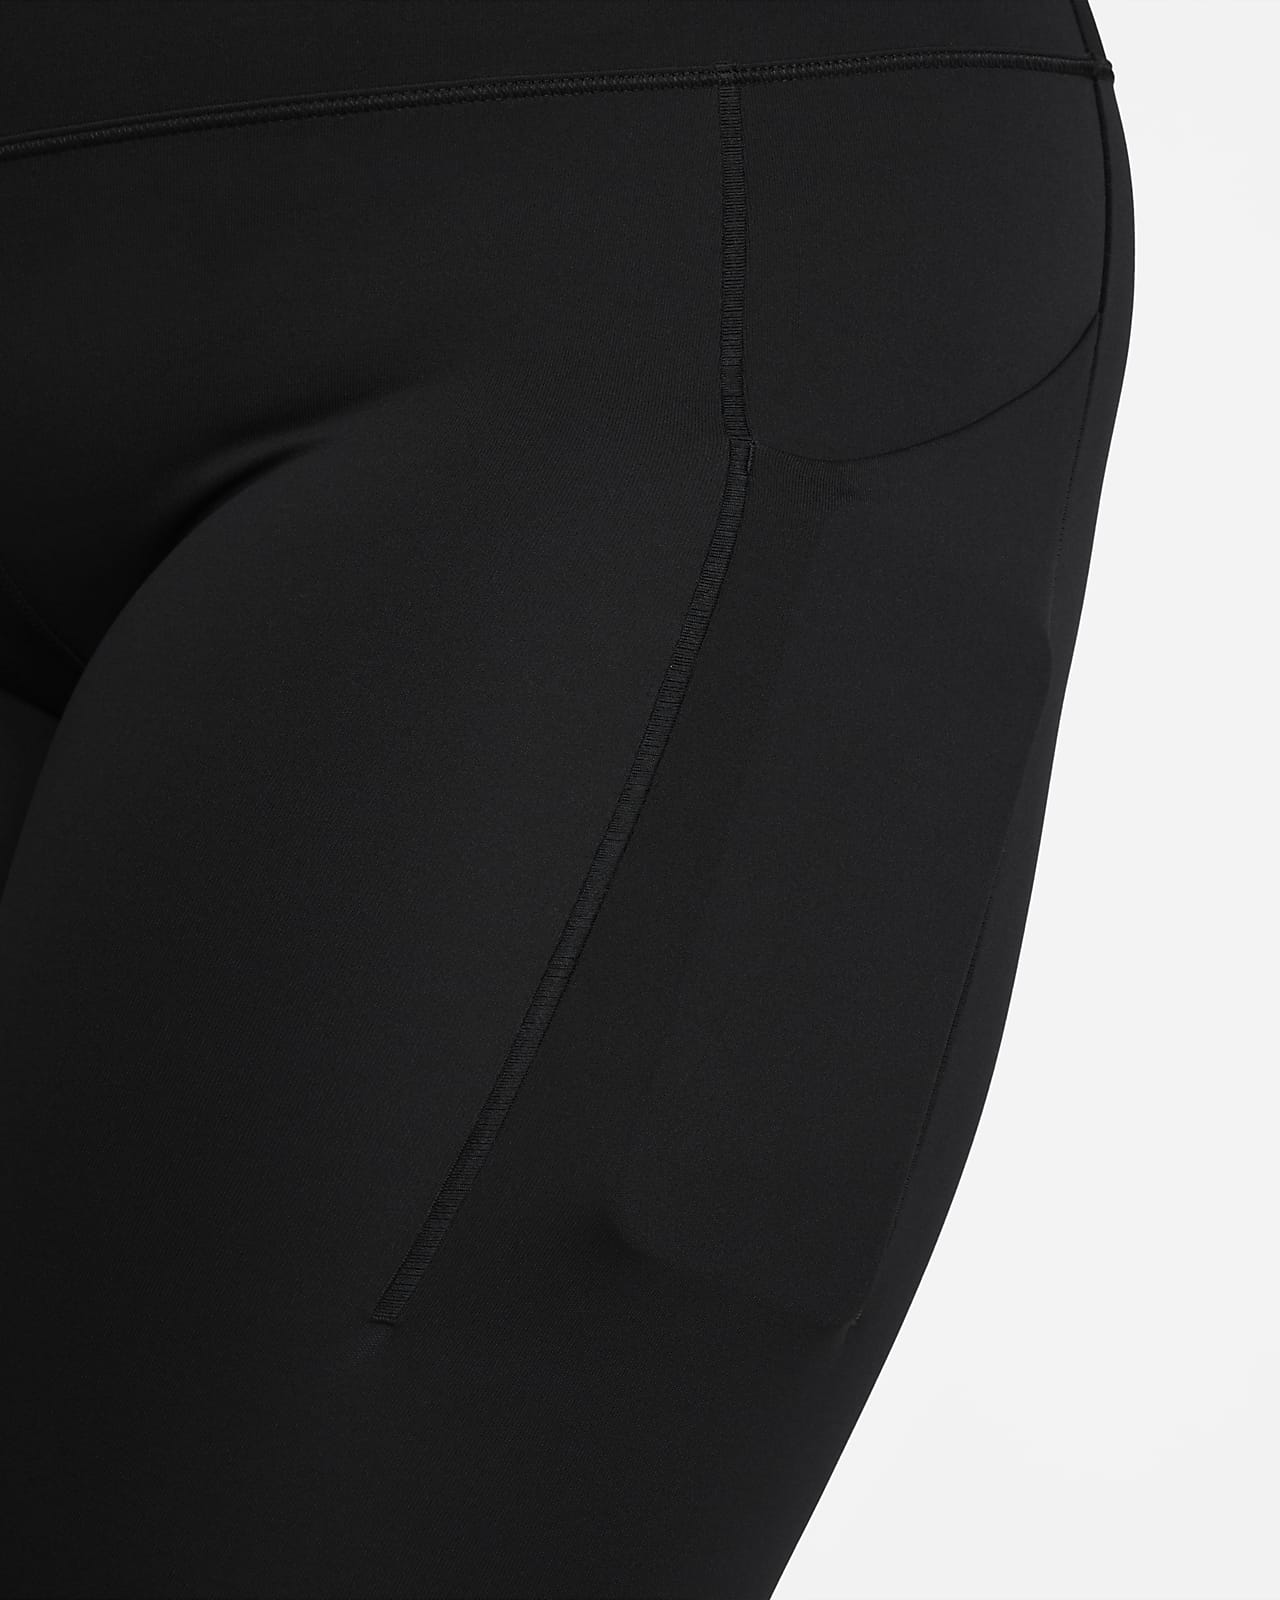 Nike Essential Logo Black Grey Mid Rise Leggings Women's Size Small -  beyond exchange